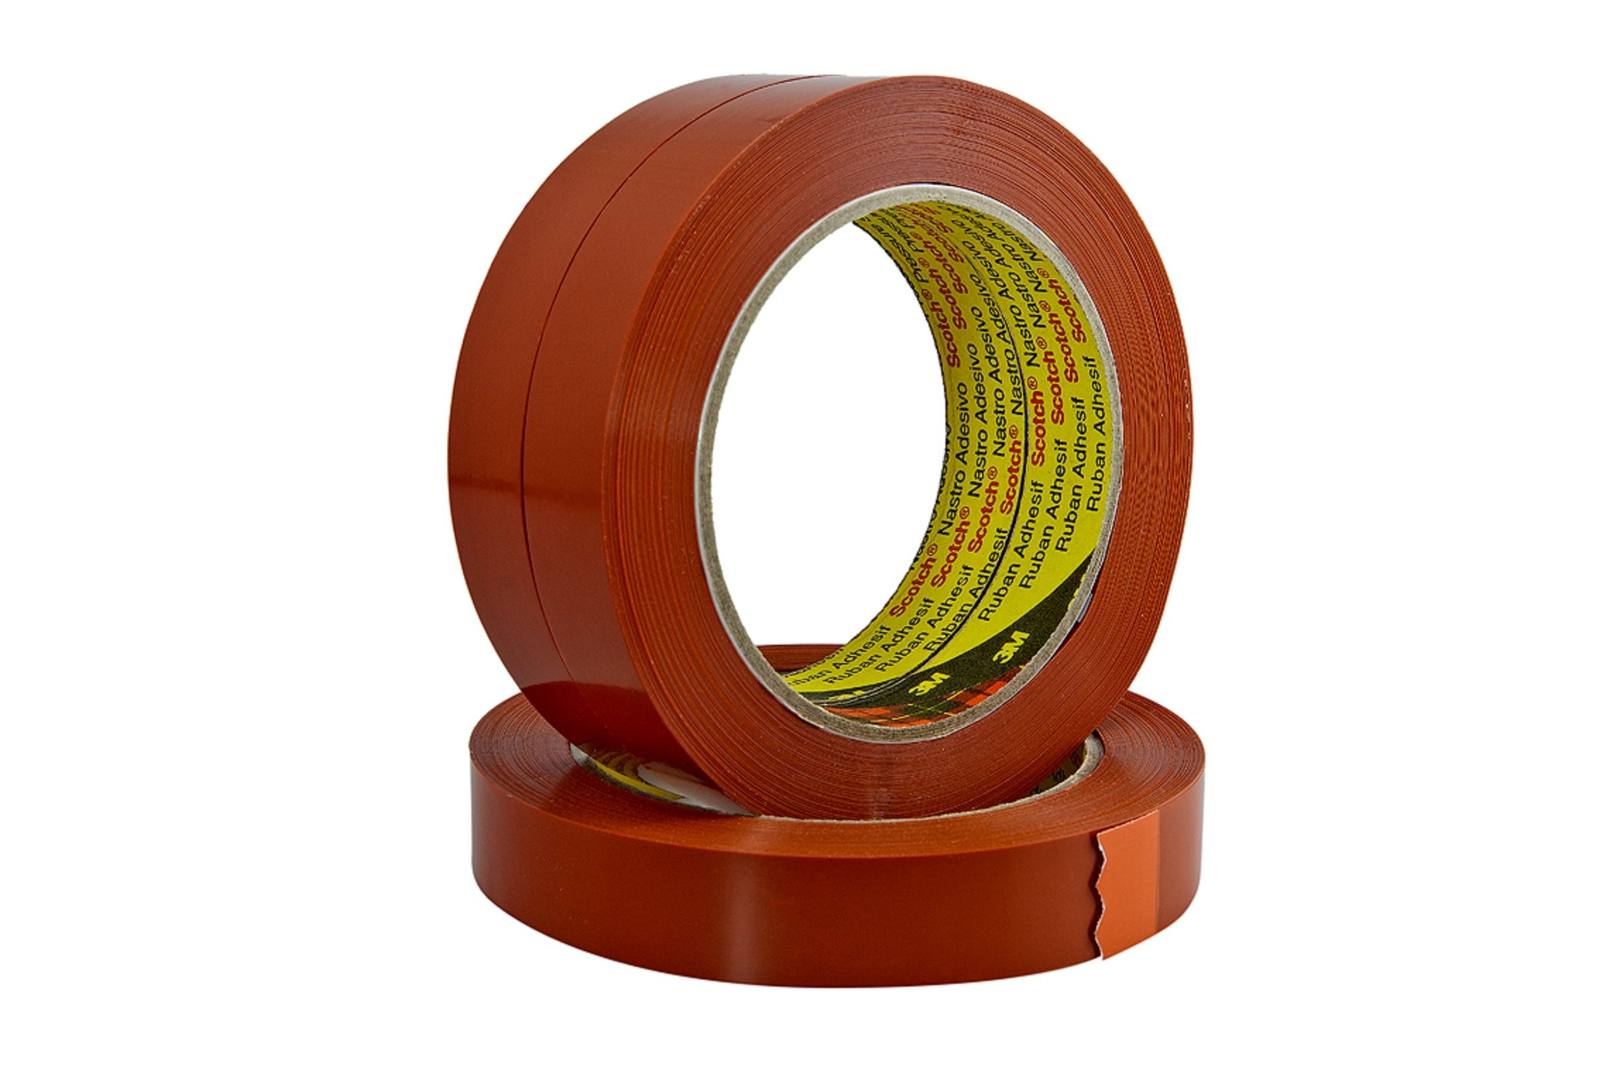 3M Scotch strapping tape 3741, orange, 19 mm x 66 m, 0.071 mm